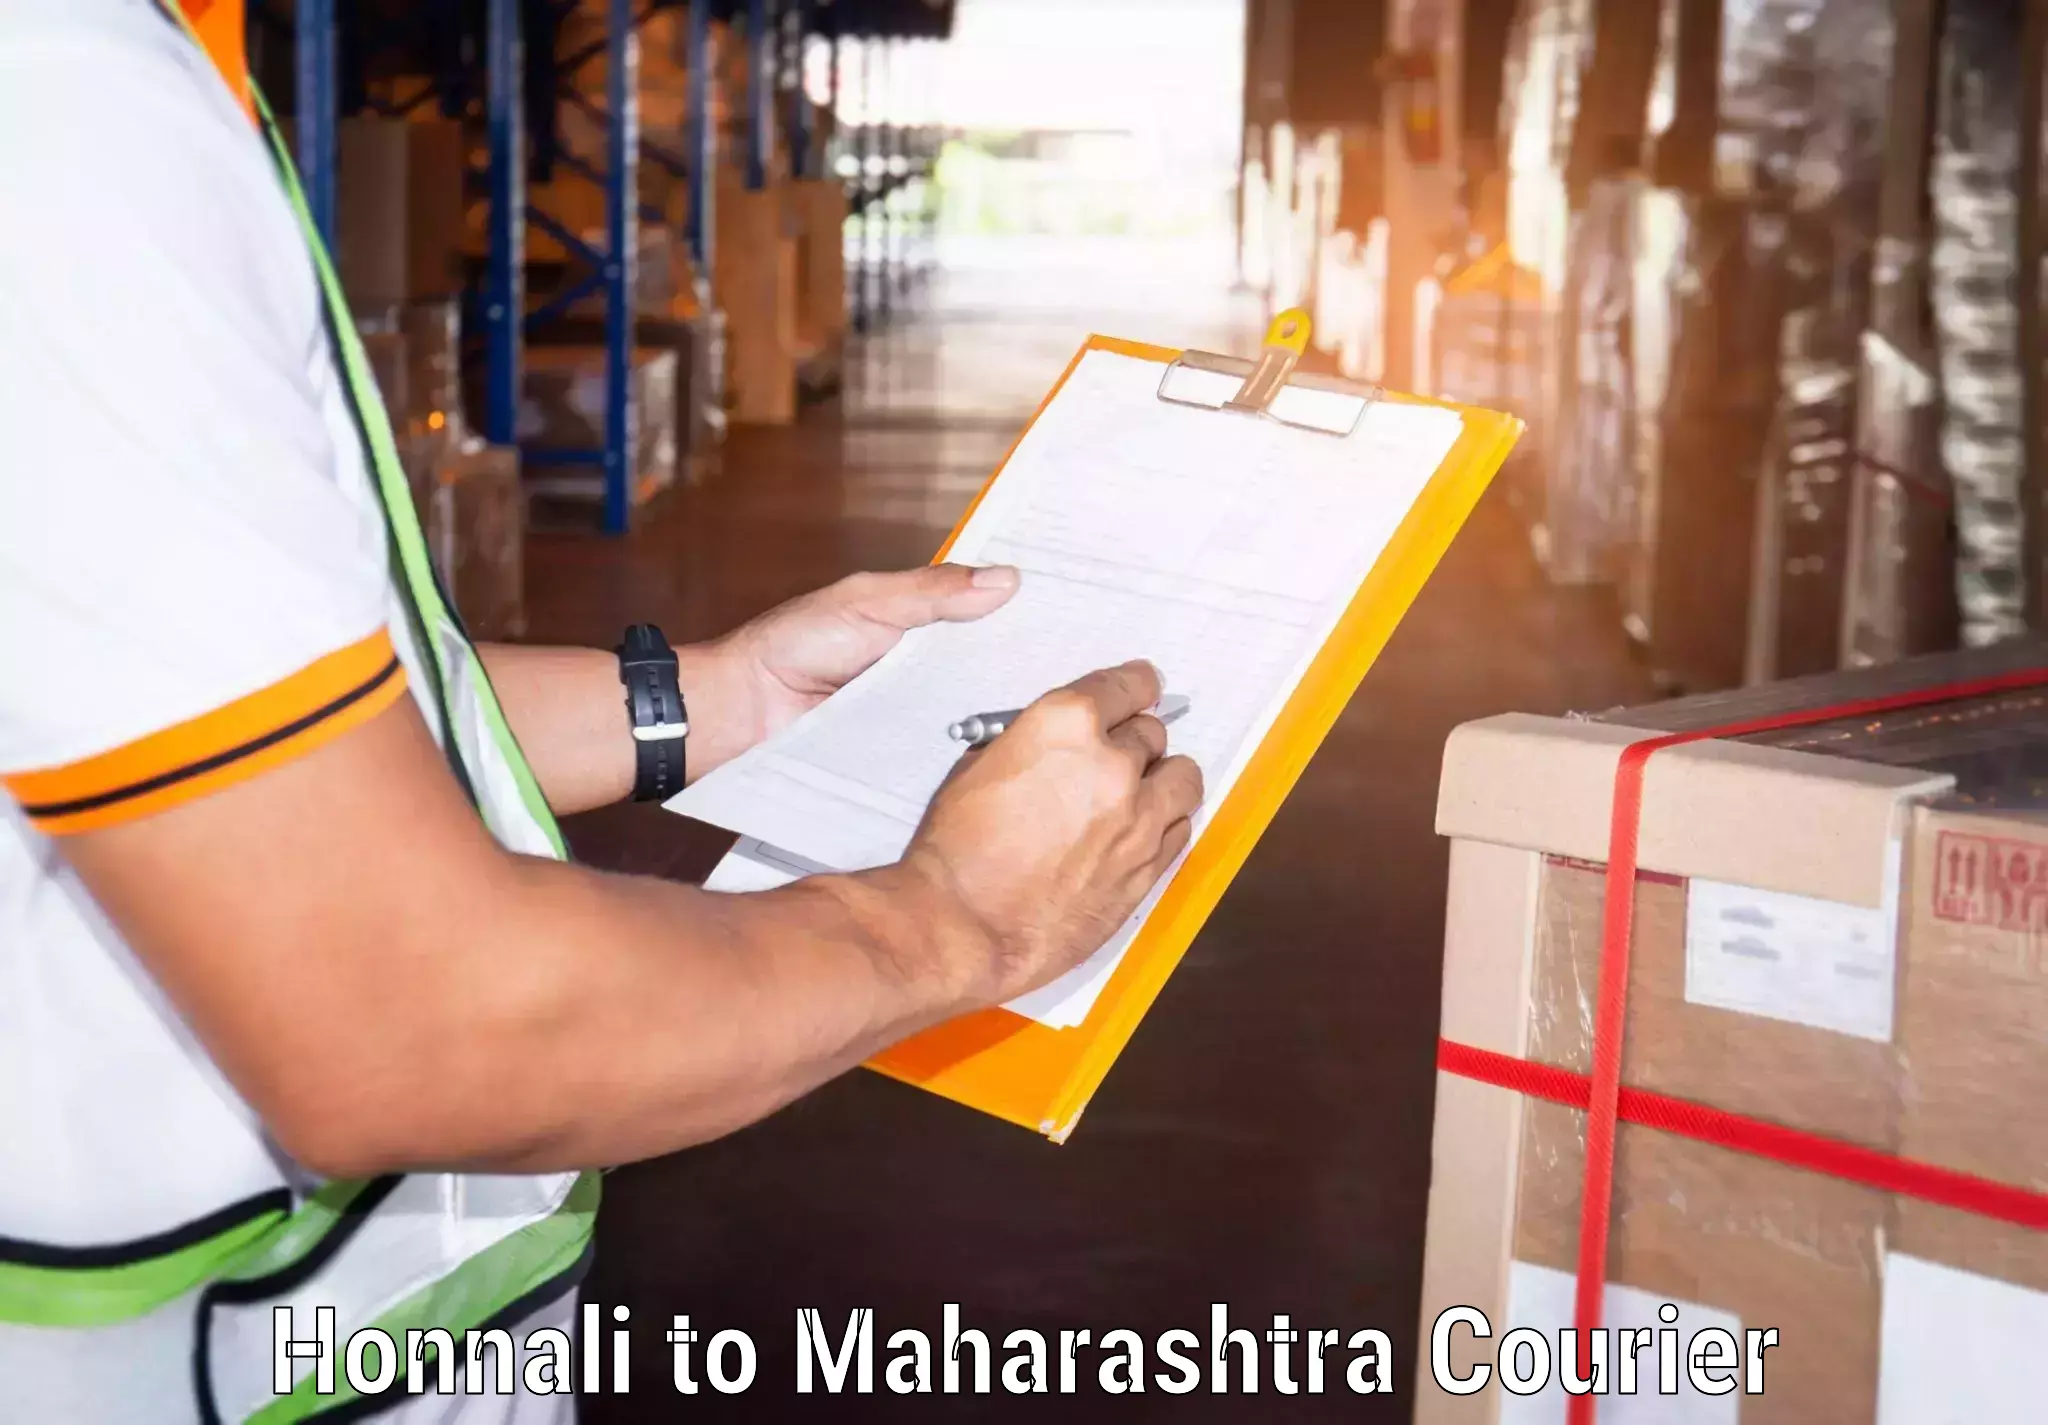 Courier service partnerships Honnali to Aurangabad